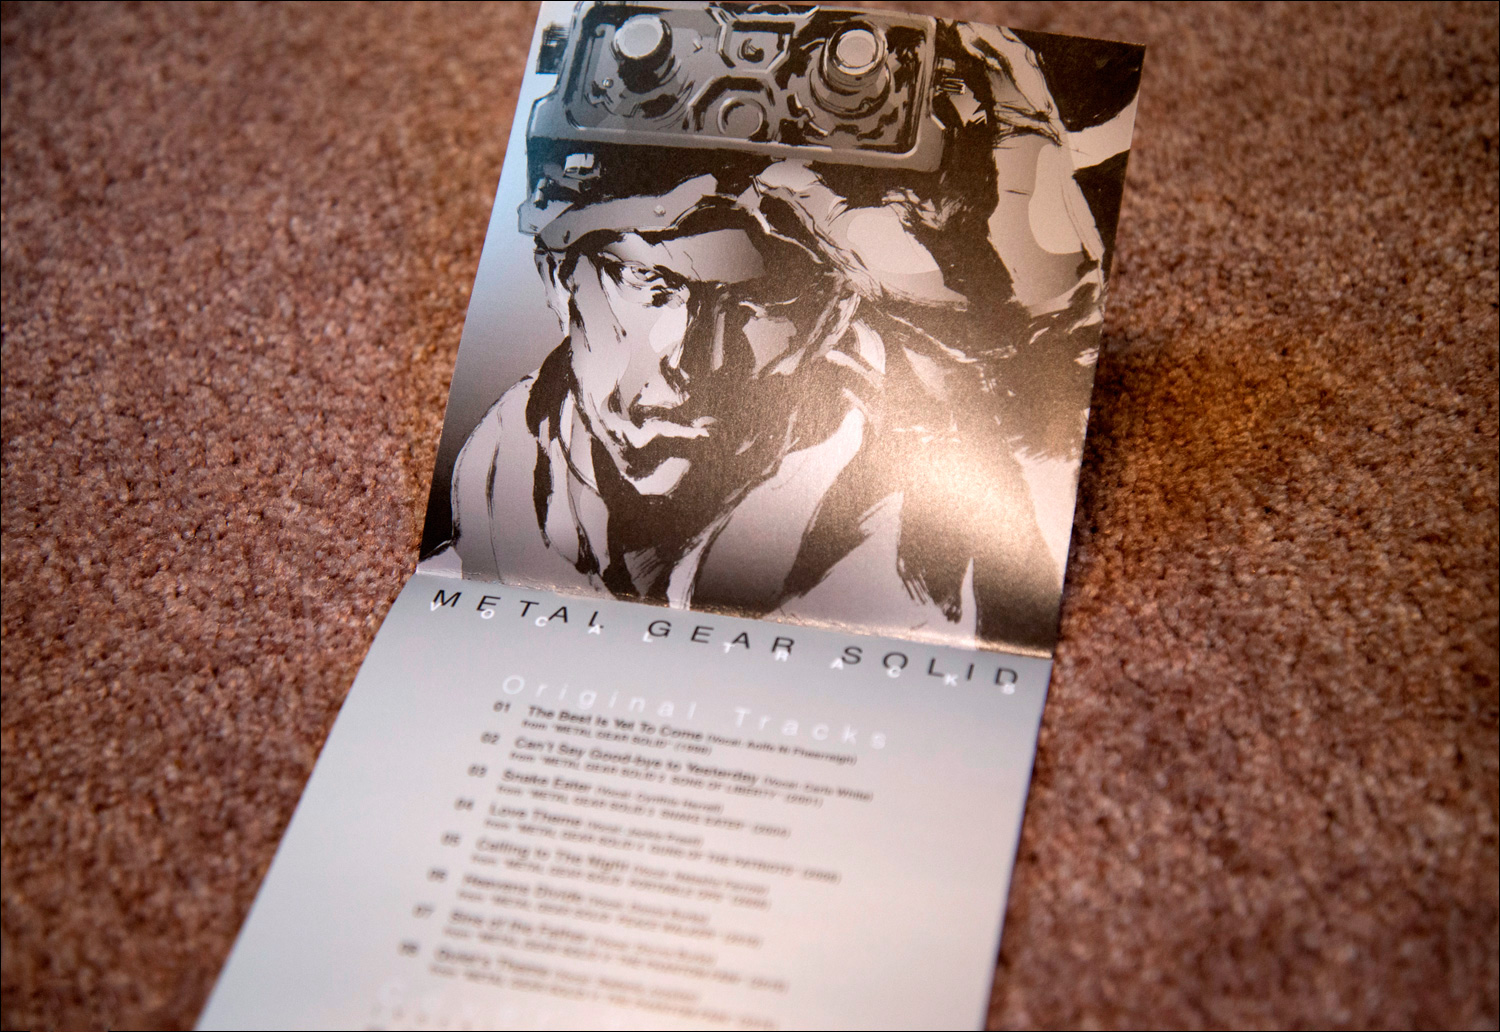 Metal-Gear-Solid-Vocal-Tracks-Tracklist